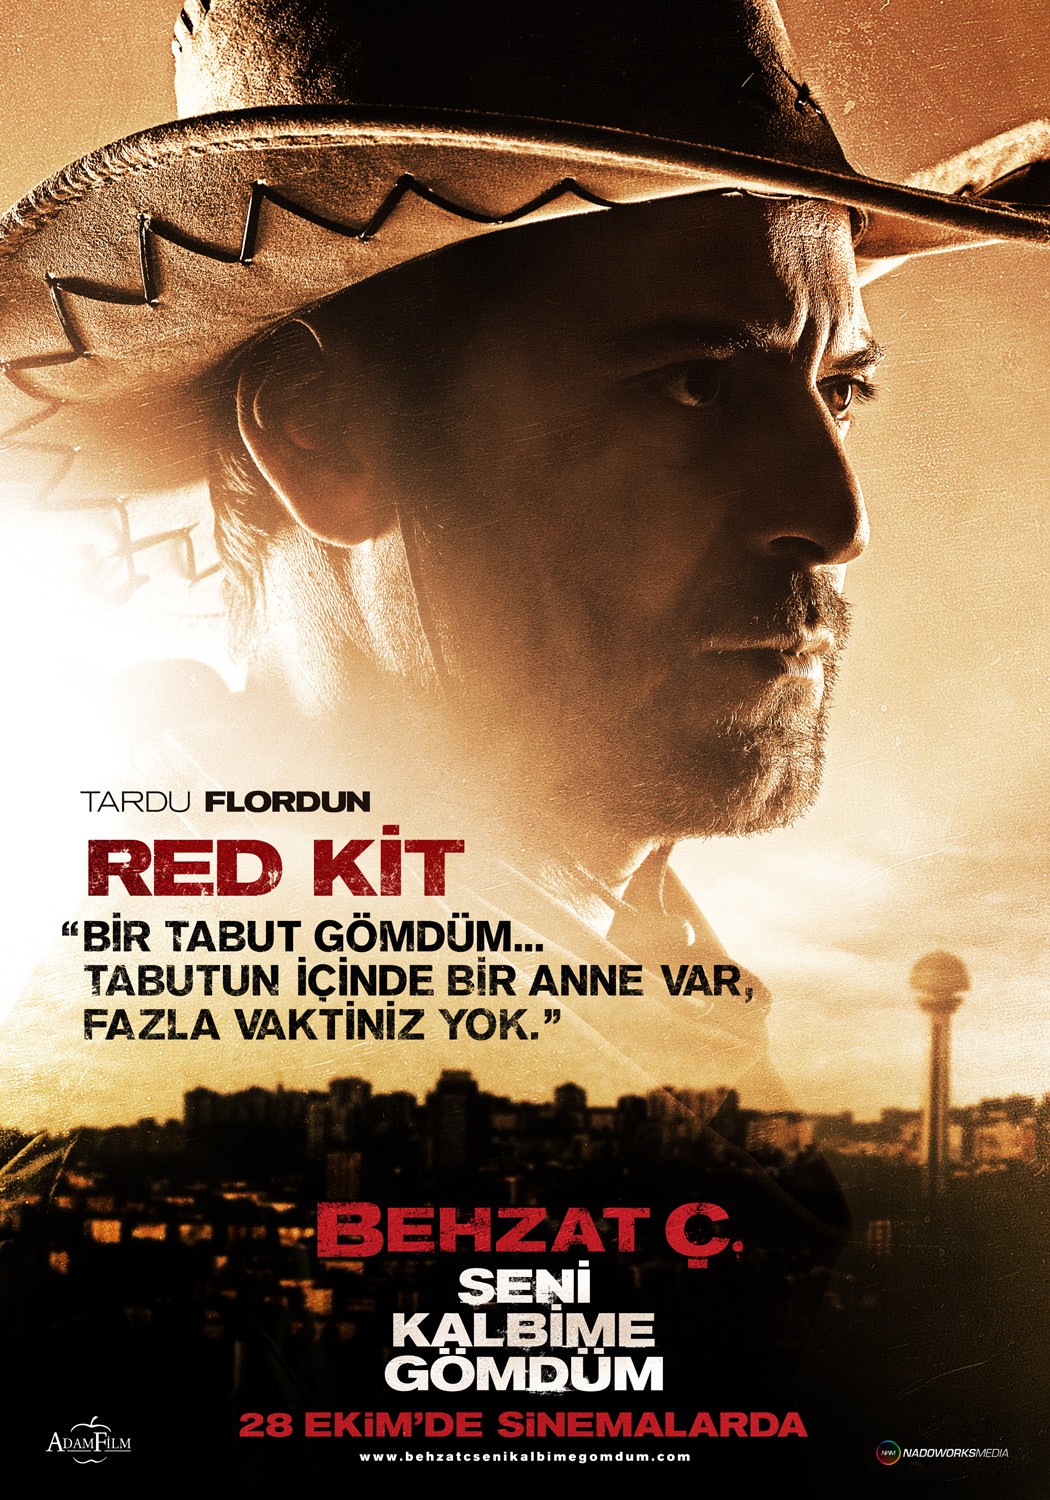 Extra Large Movie Poster Image for Behzat Ç - Seni Kalbime Gömdüm (#7 of 12)